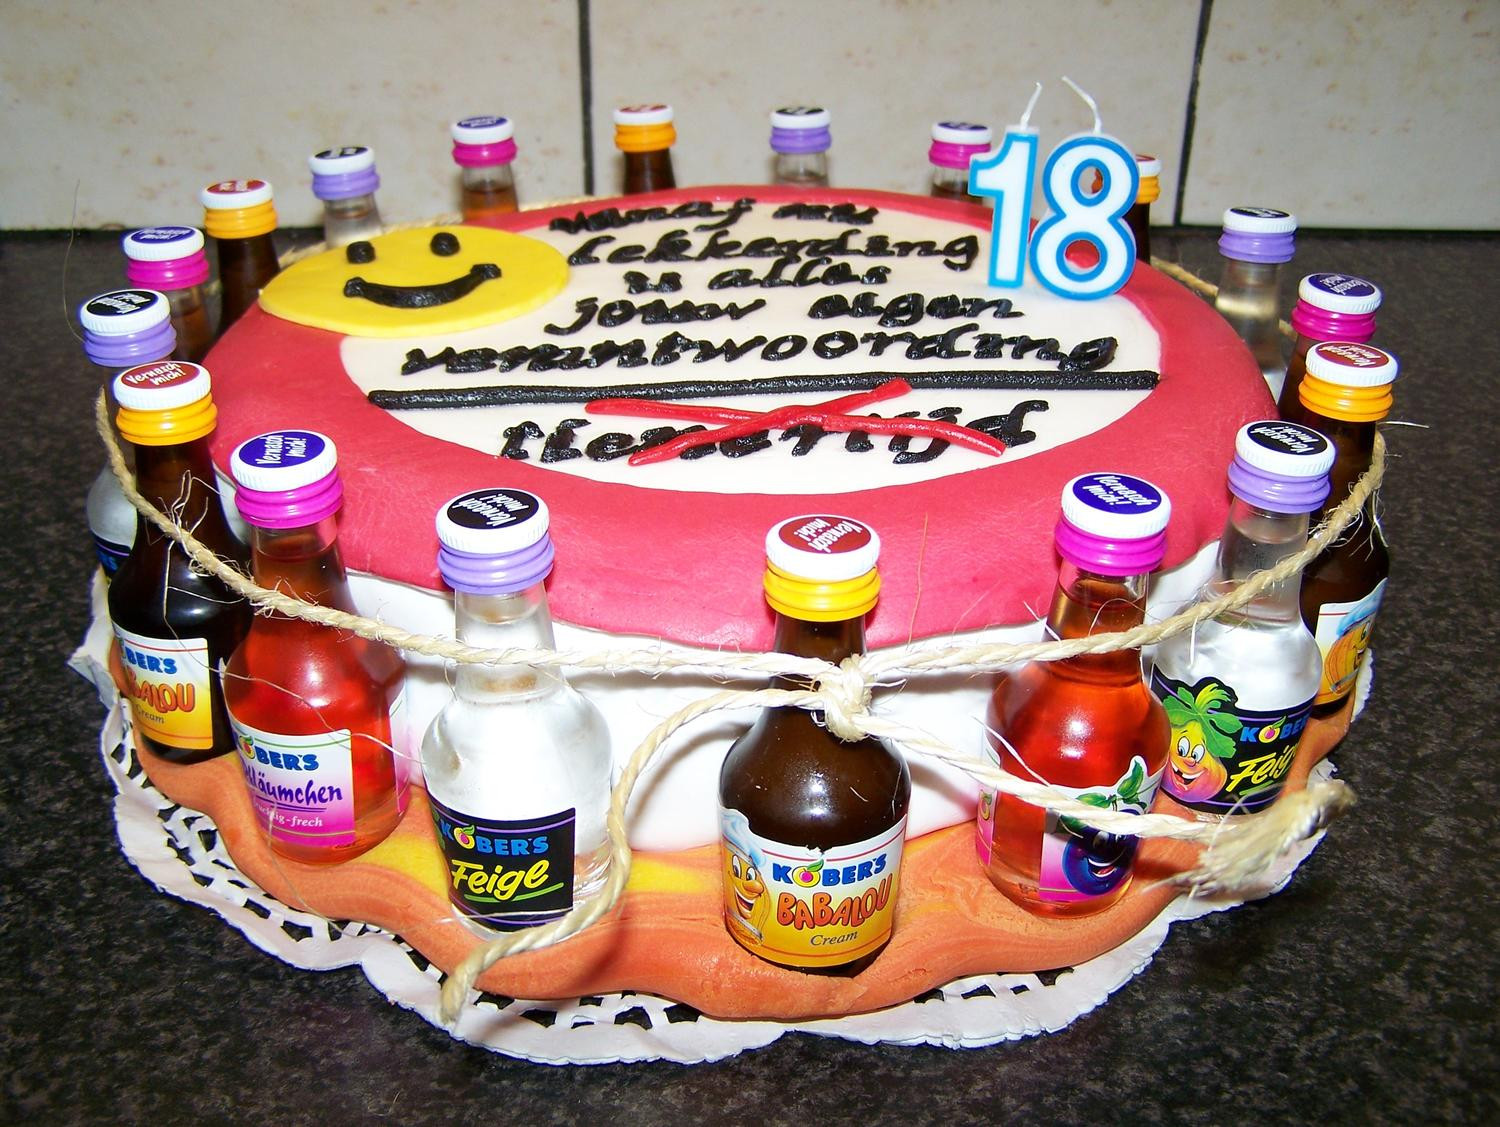 Geschenkideen 18 Geburtstag
 Robby s Torte zum 18 Geburtstag Rezept kochbar